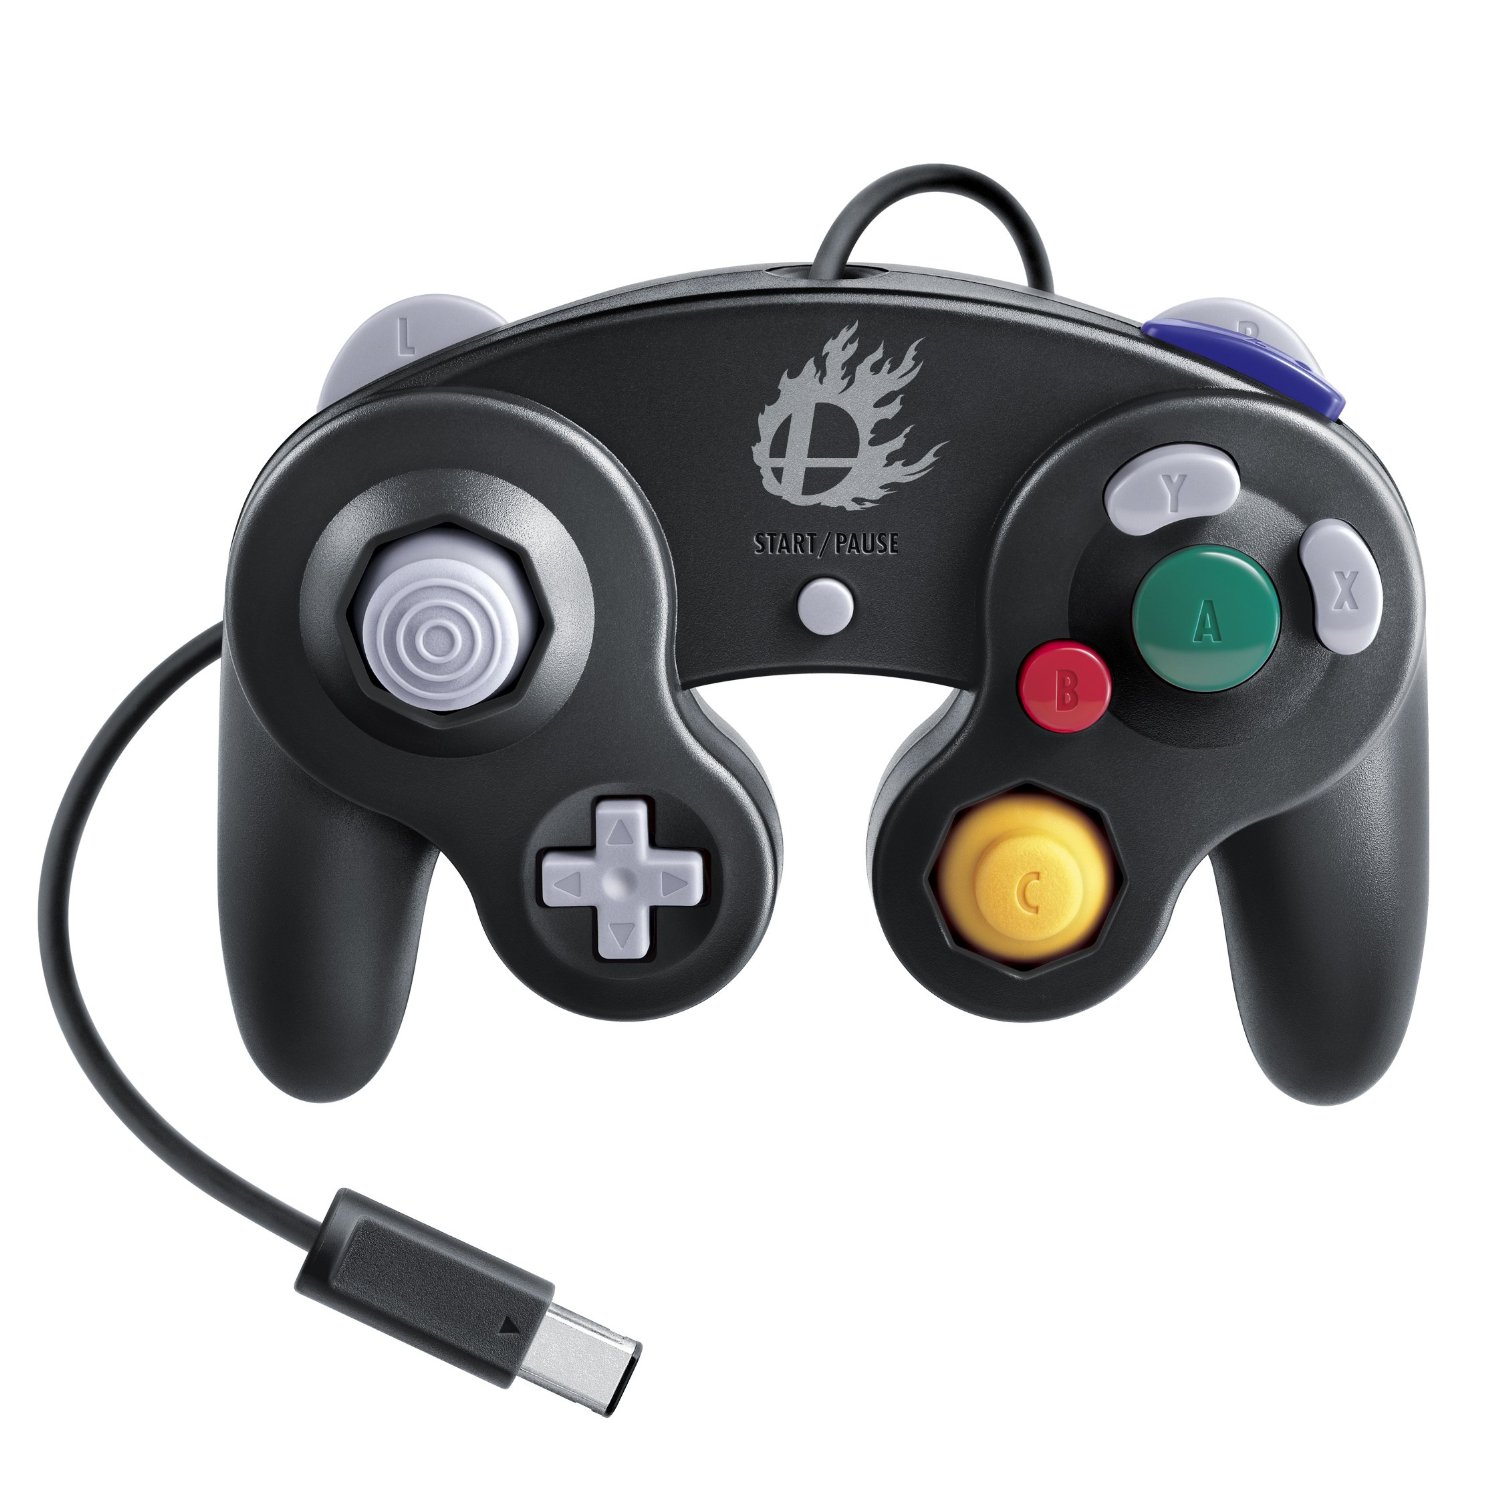 Super Smash Bros. for Wii U Bundle Gamecube Controller Adapter